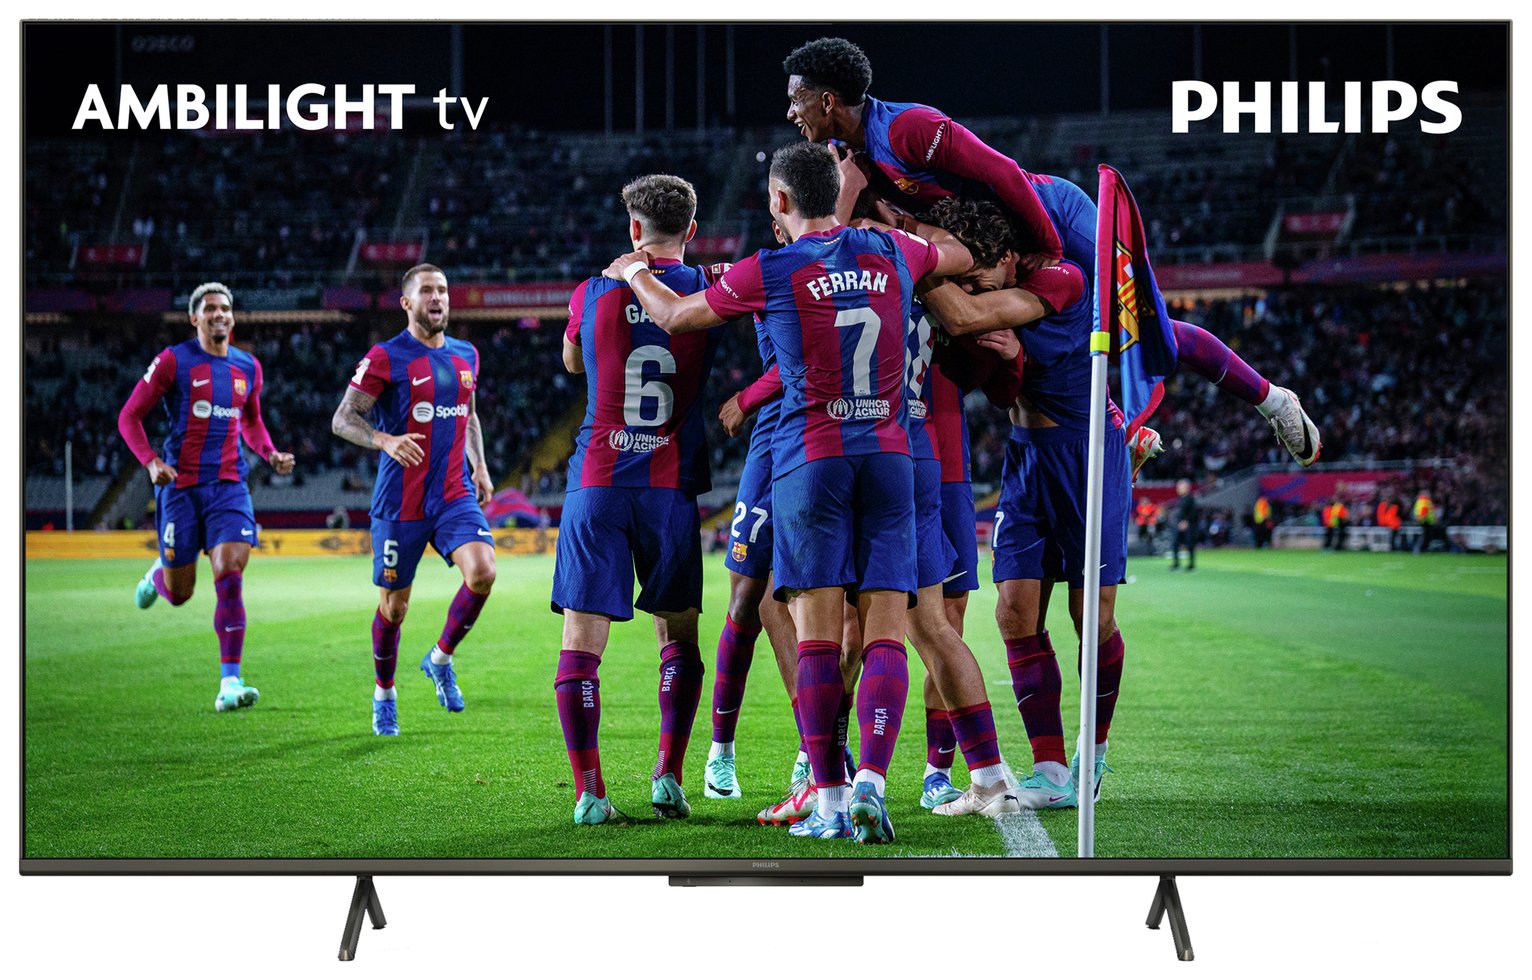 Philips Ambilight 65 Inch PUS8108 Smart 4K UHD HDR LED TV